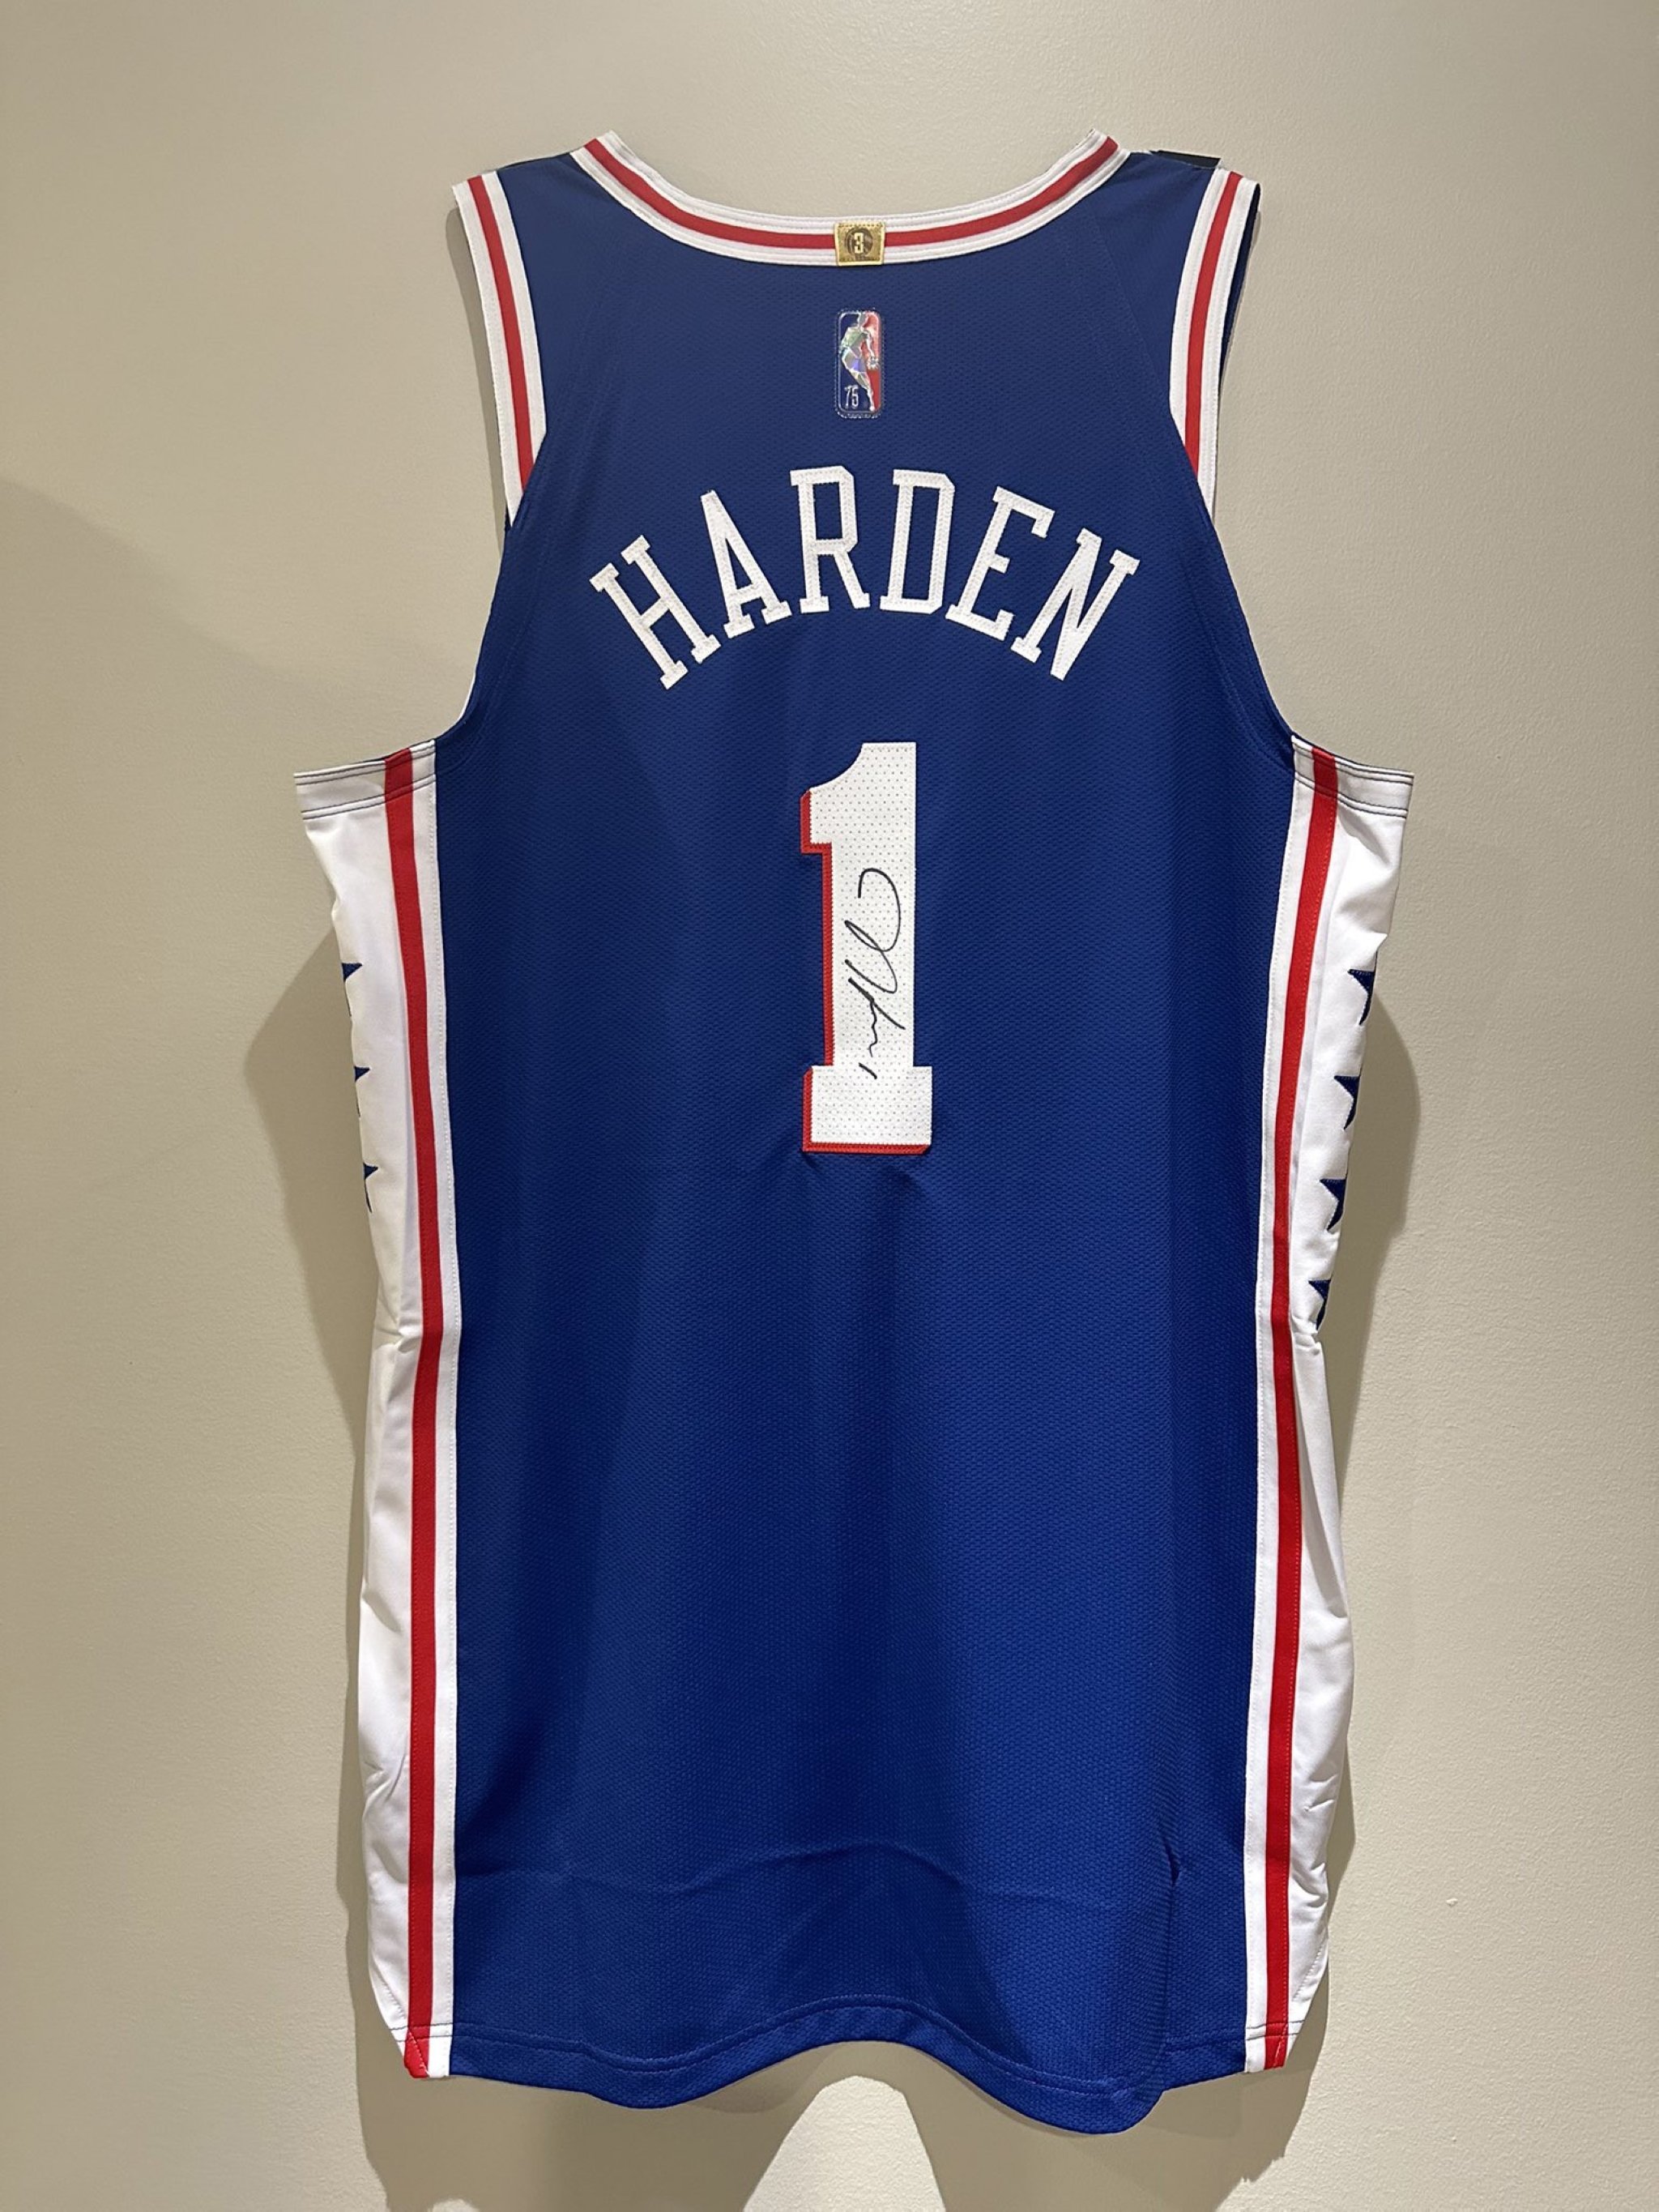 Jersey bertanda tangan James Harden dari NBA Philadelphia 76ers.  (Foto IHA)